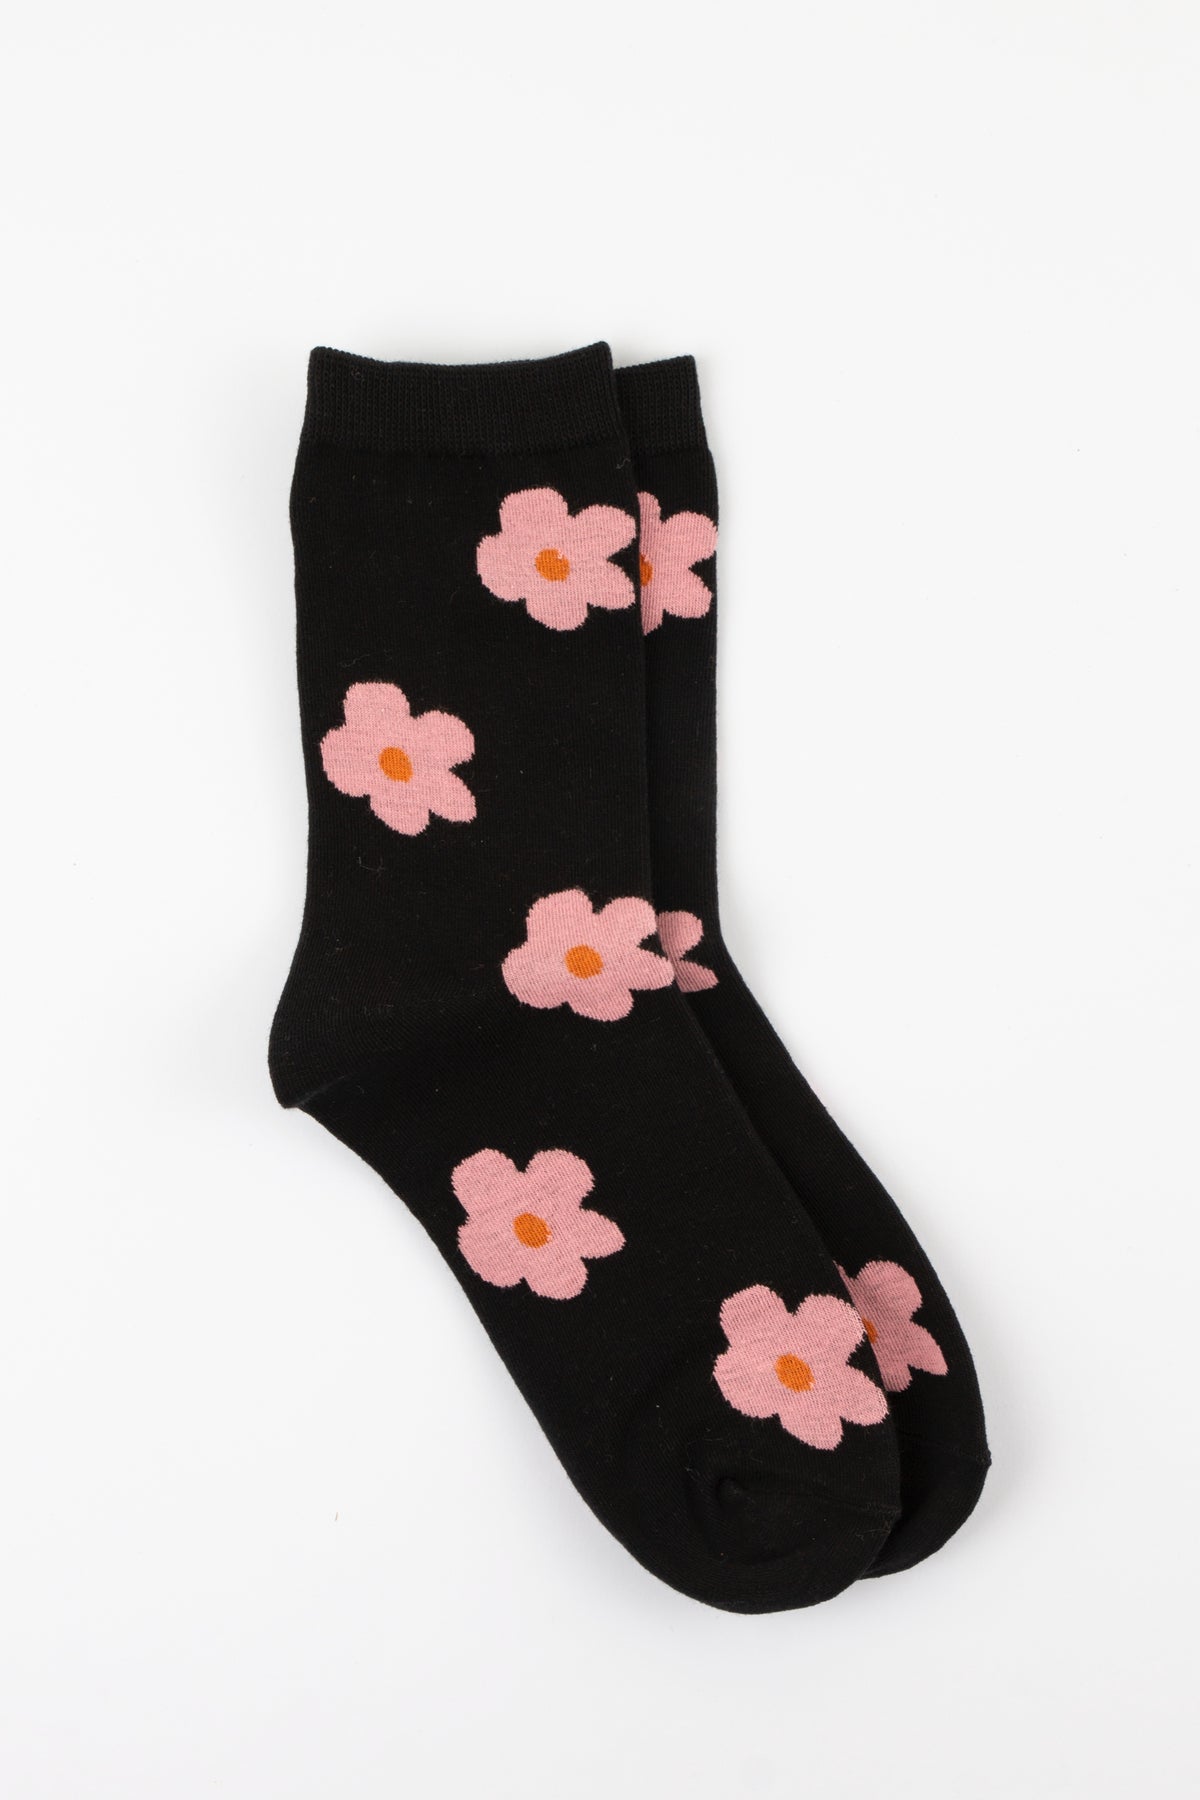 Black With Pink Flowers Socks